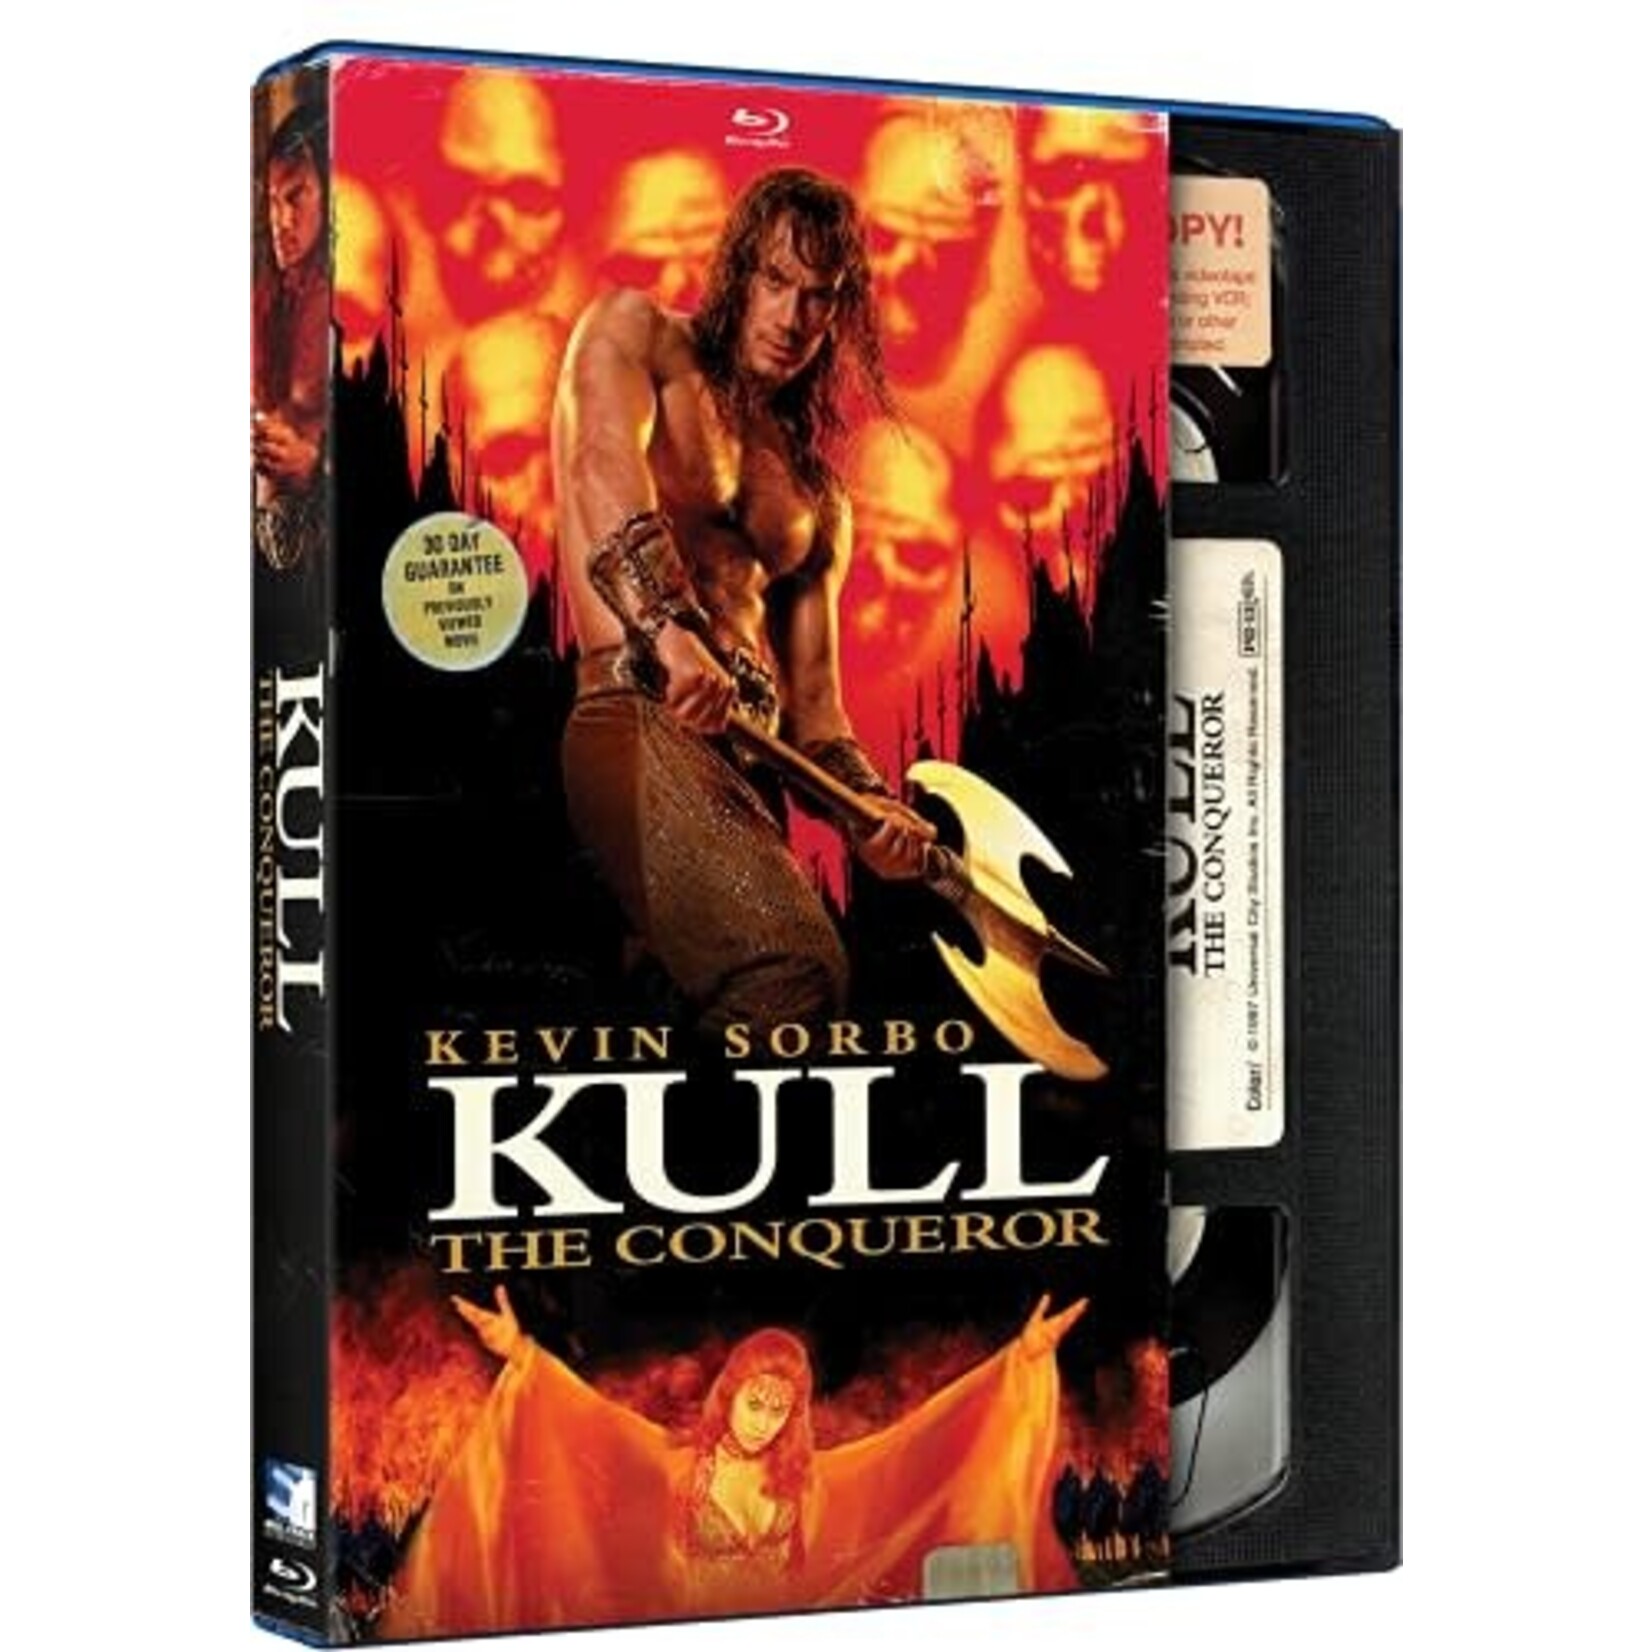 Kull The Conqueror (1997) (Retro VHS Packaging) [BRD]